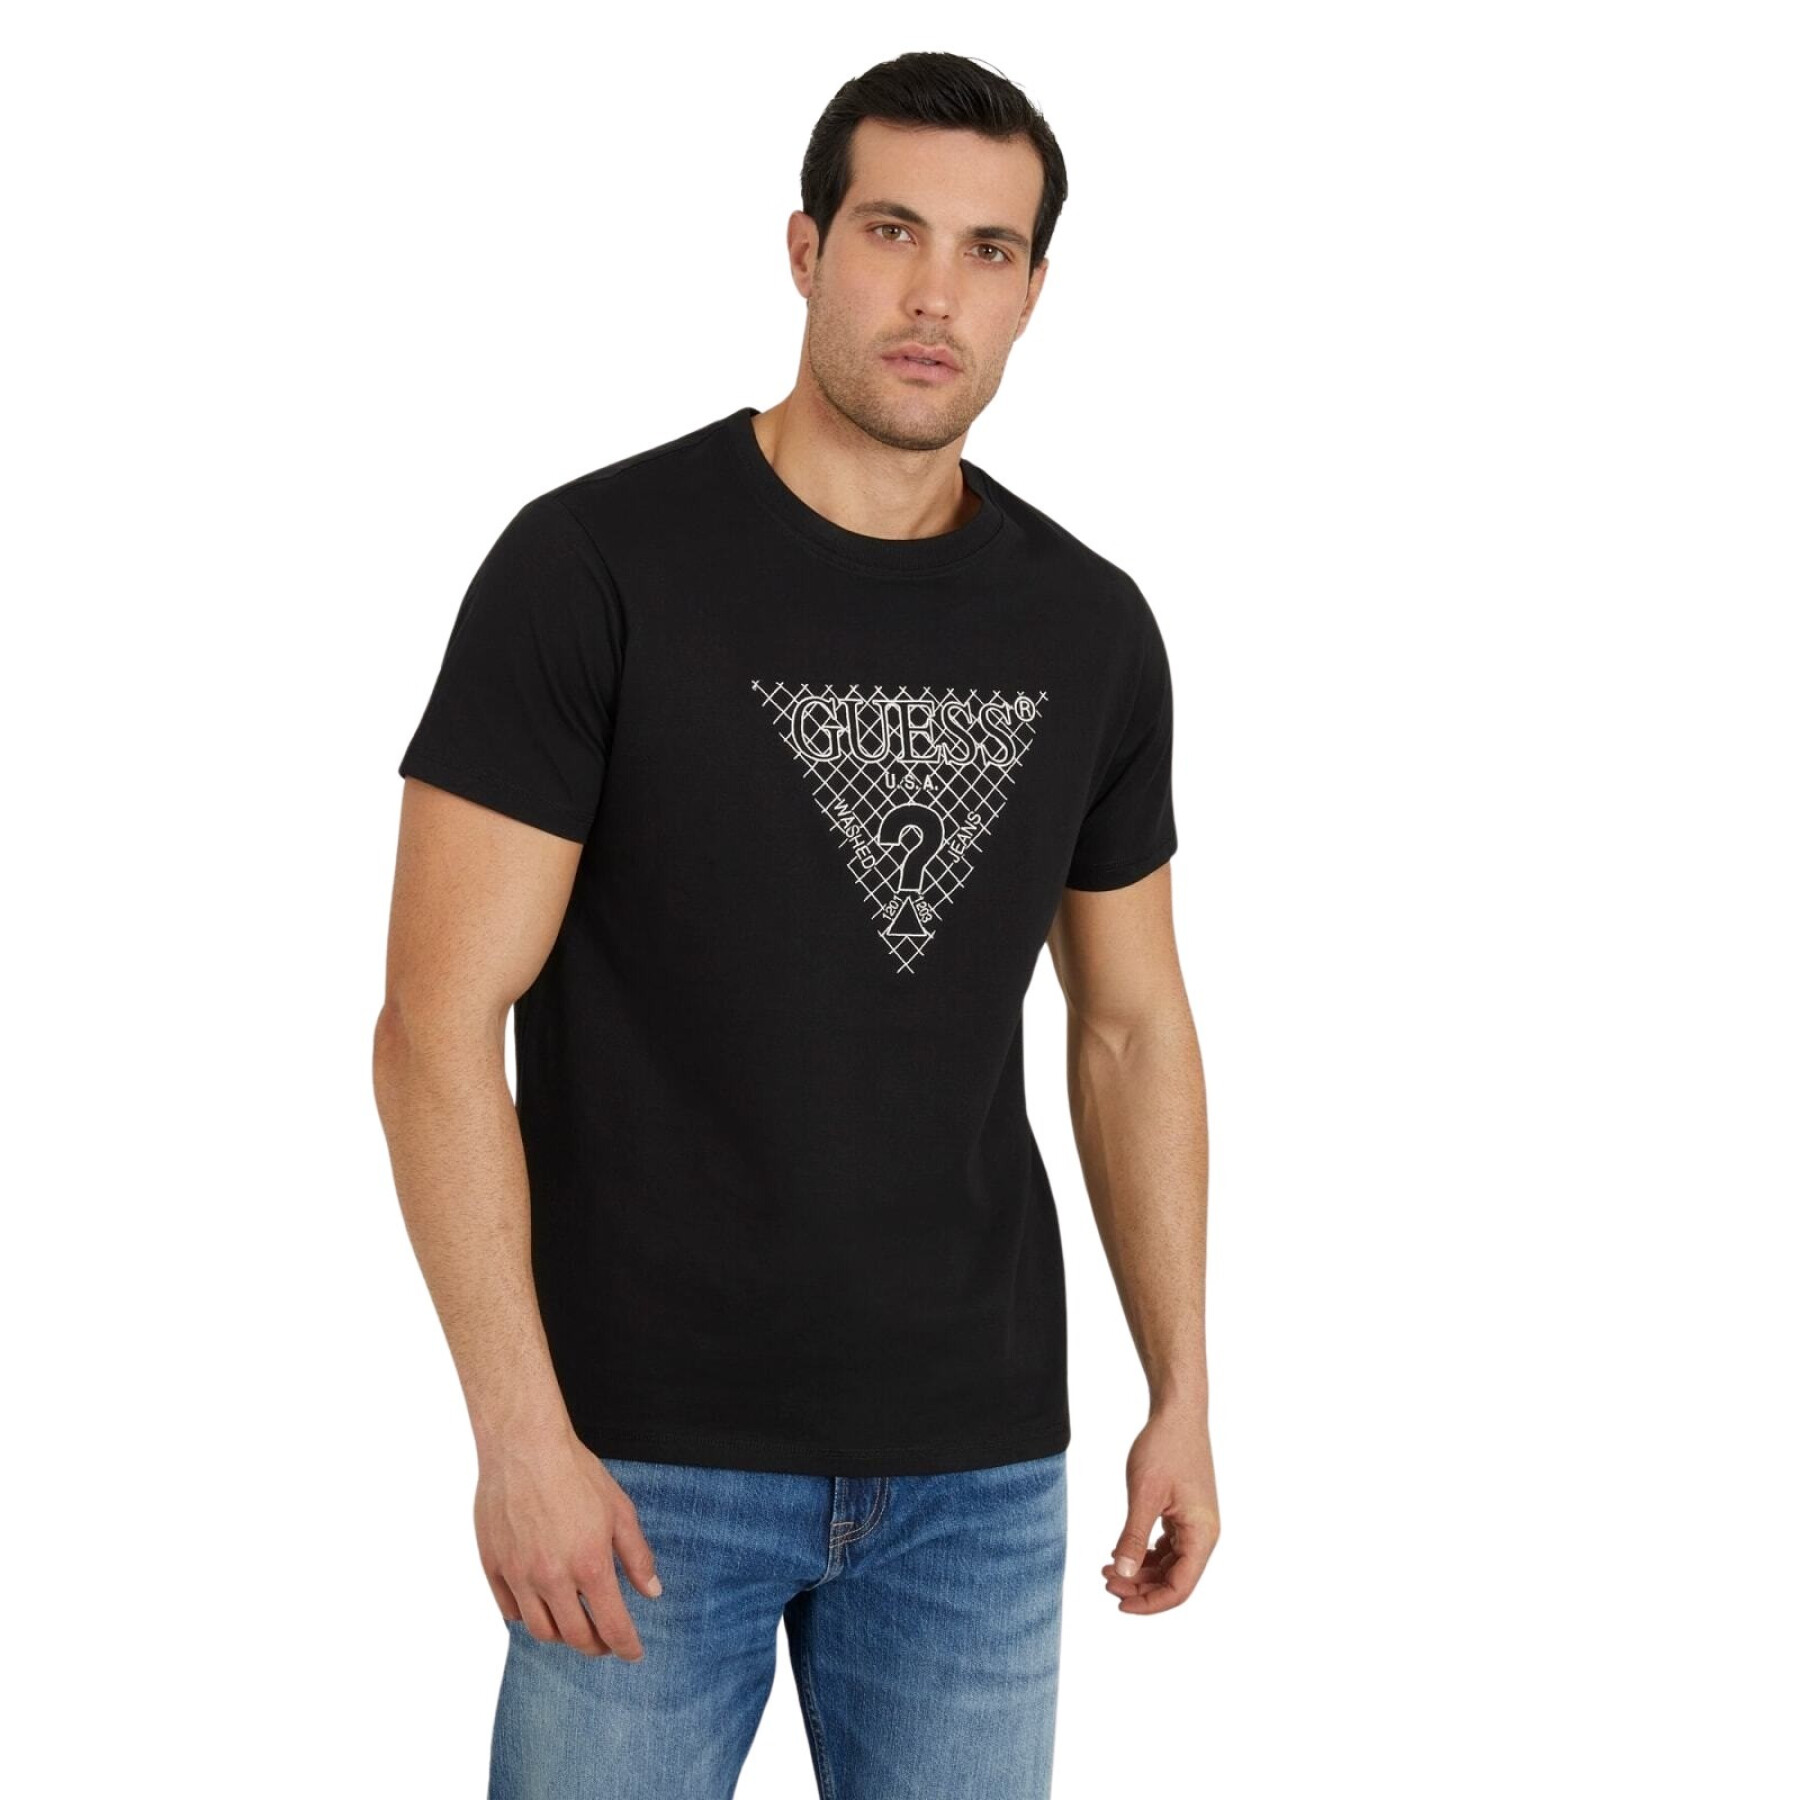 T-shirt Guess Triangle Embro